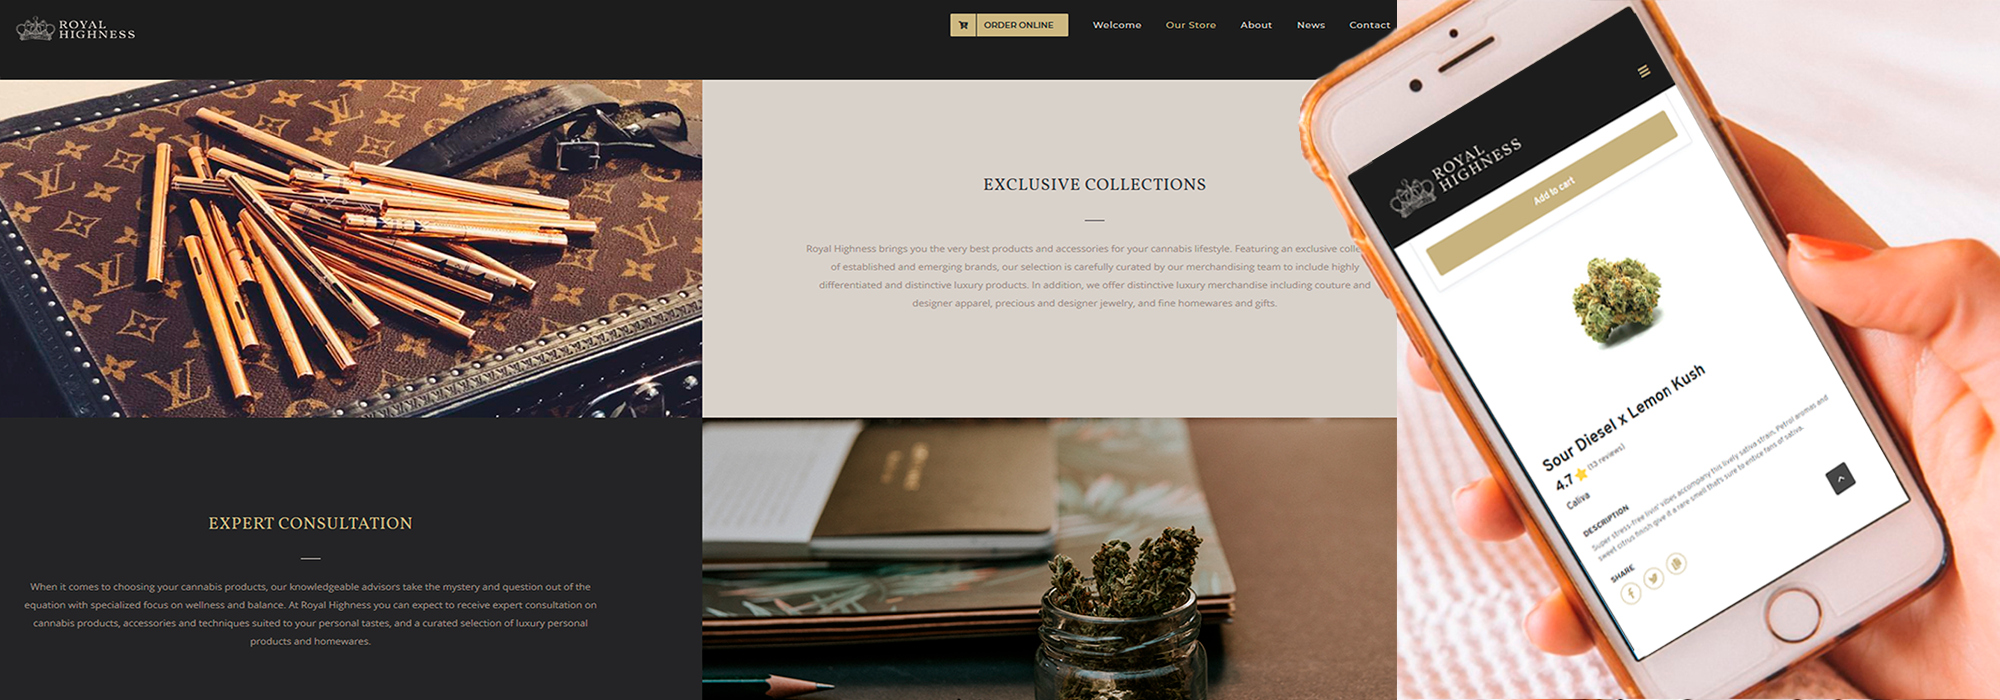 Royal Highness website design by Cannabis Marketing Arts